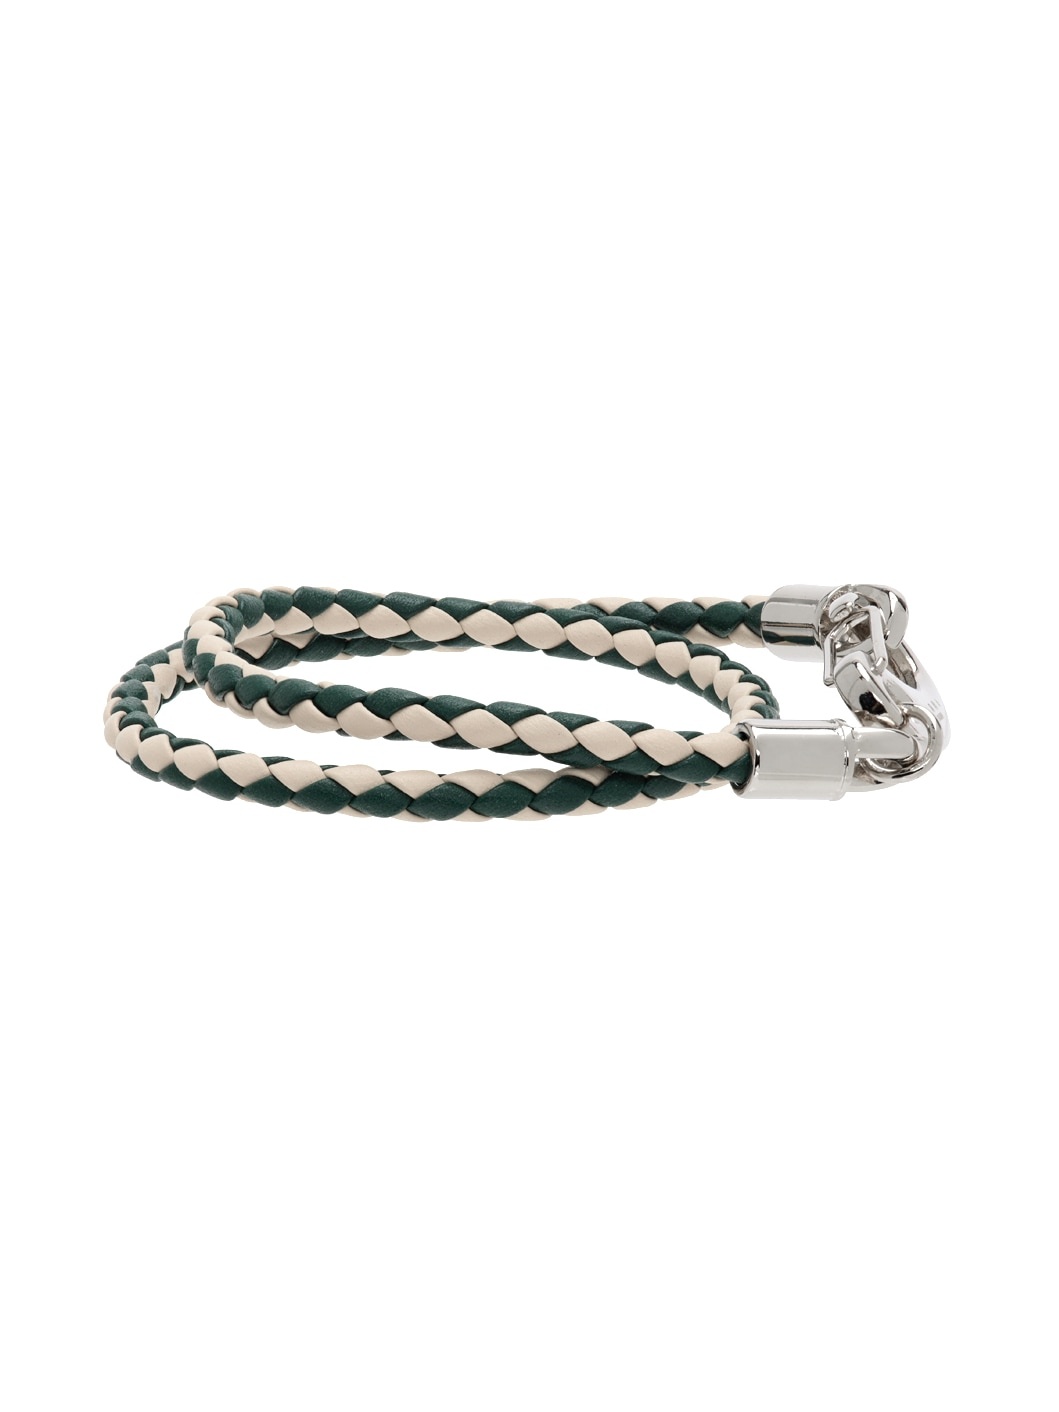 White & Green Double Wrap Braided Bracelet - 5